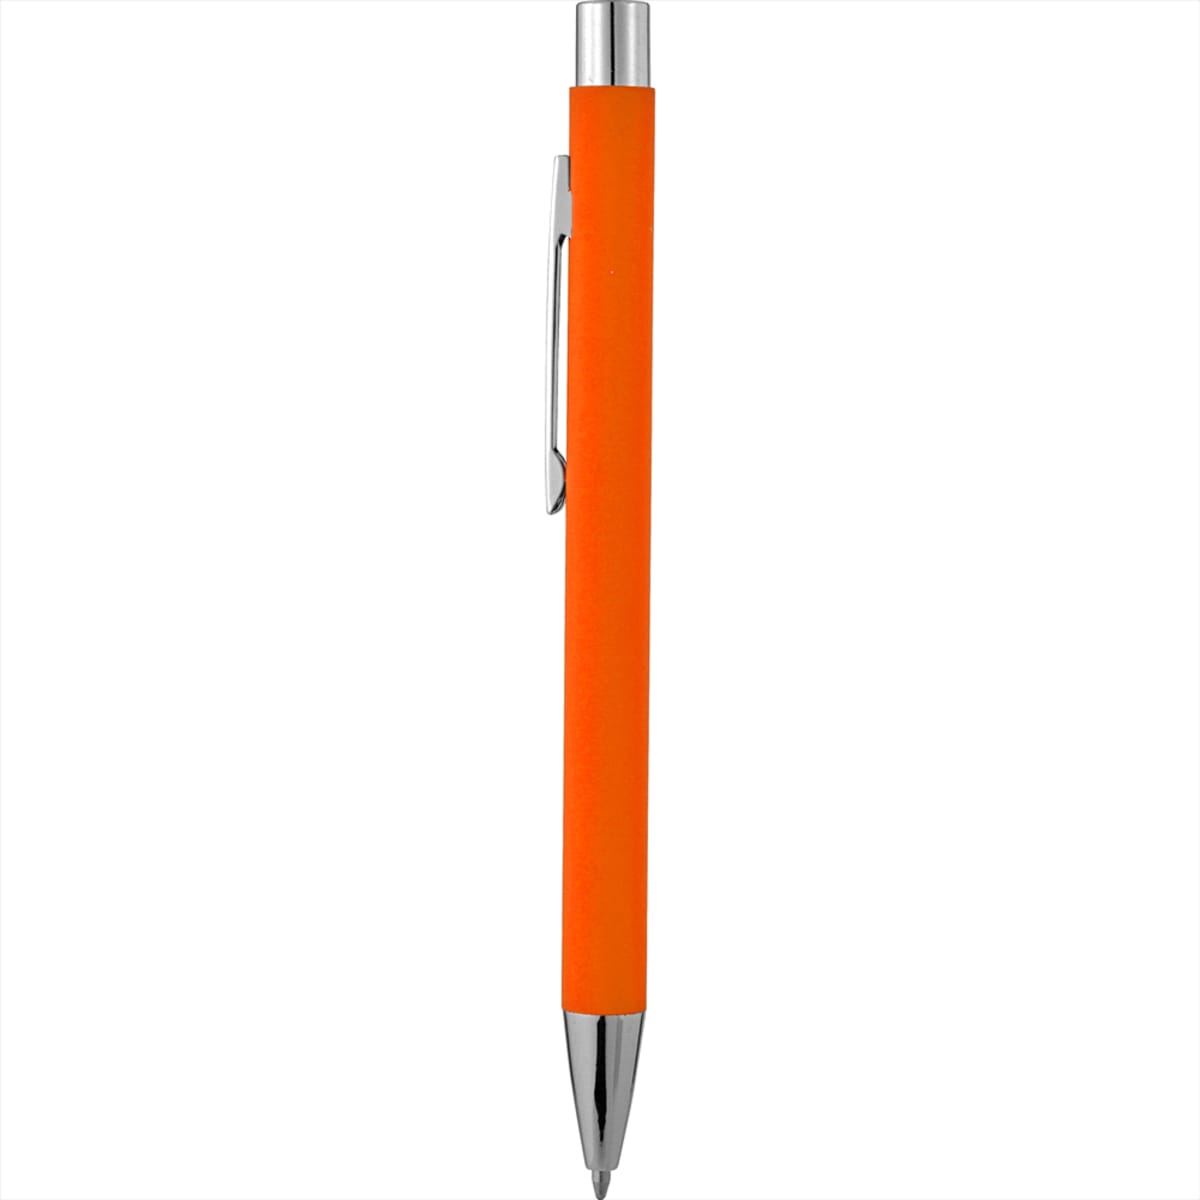 The Maven Soft Touch Metal Pen